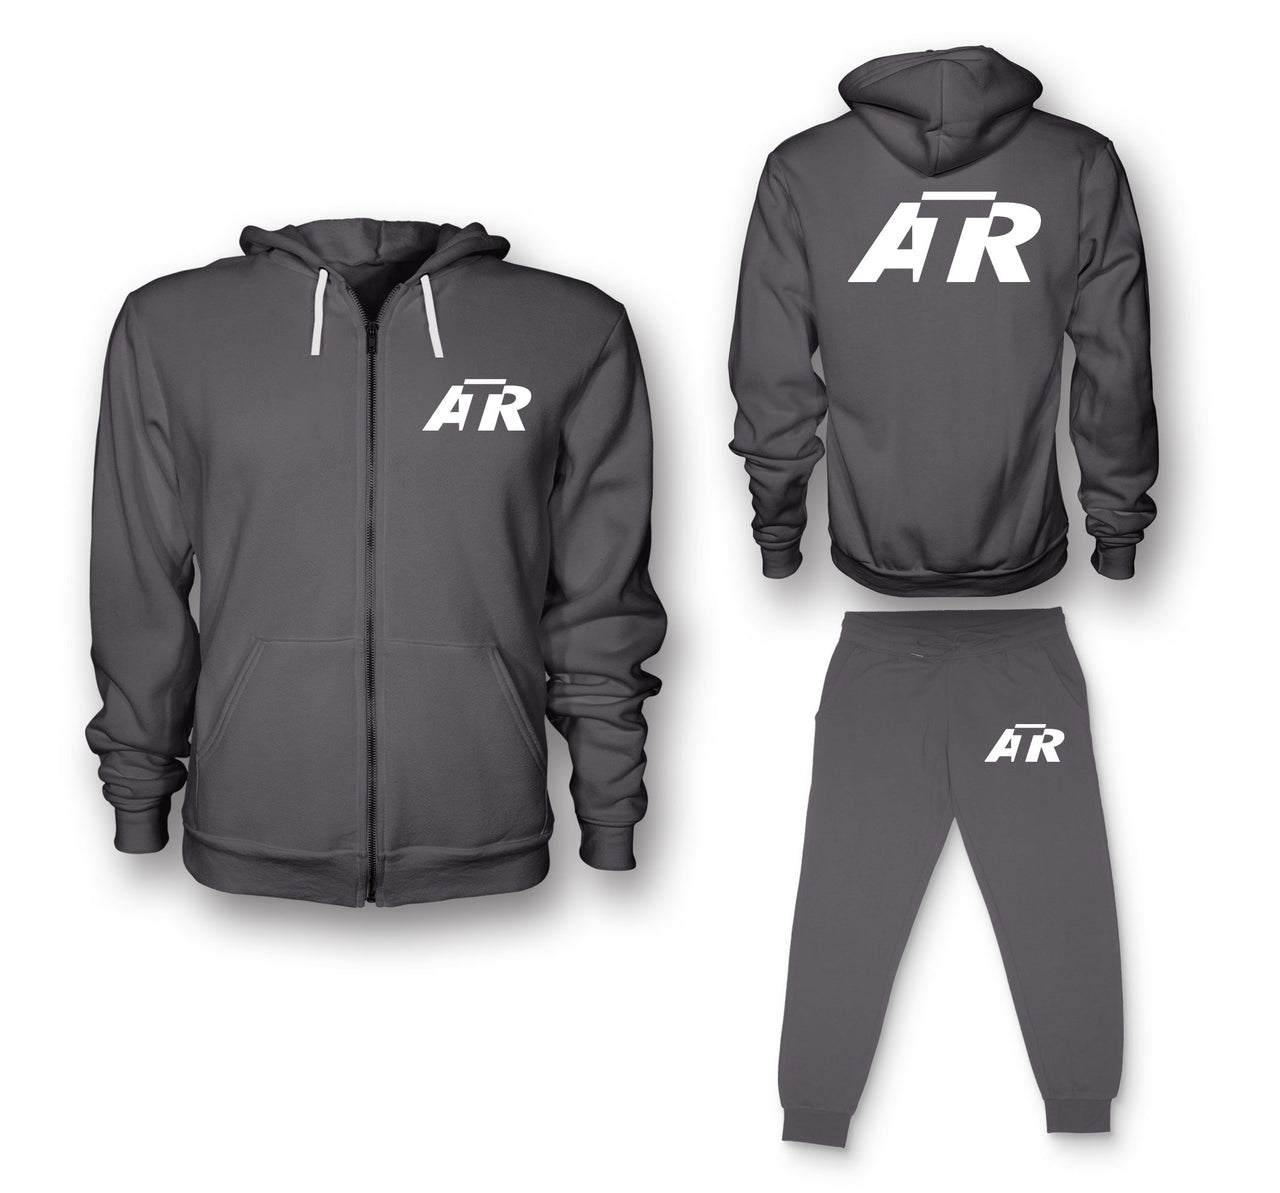 ATR & Text Designed Zipped Hoodies & Sweatpants Set